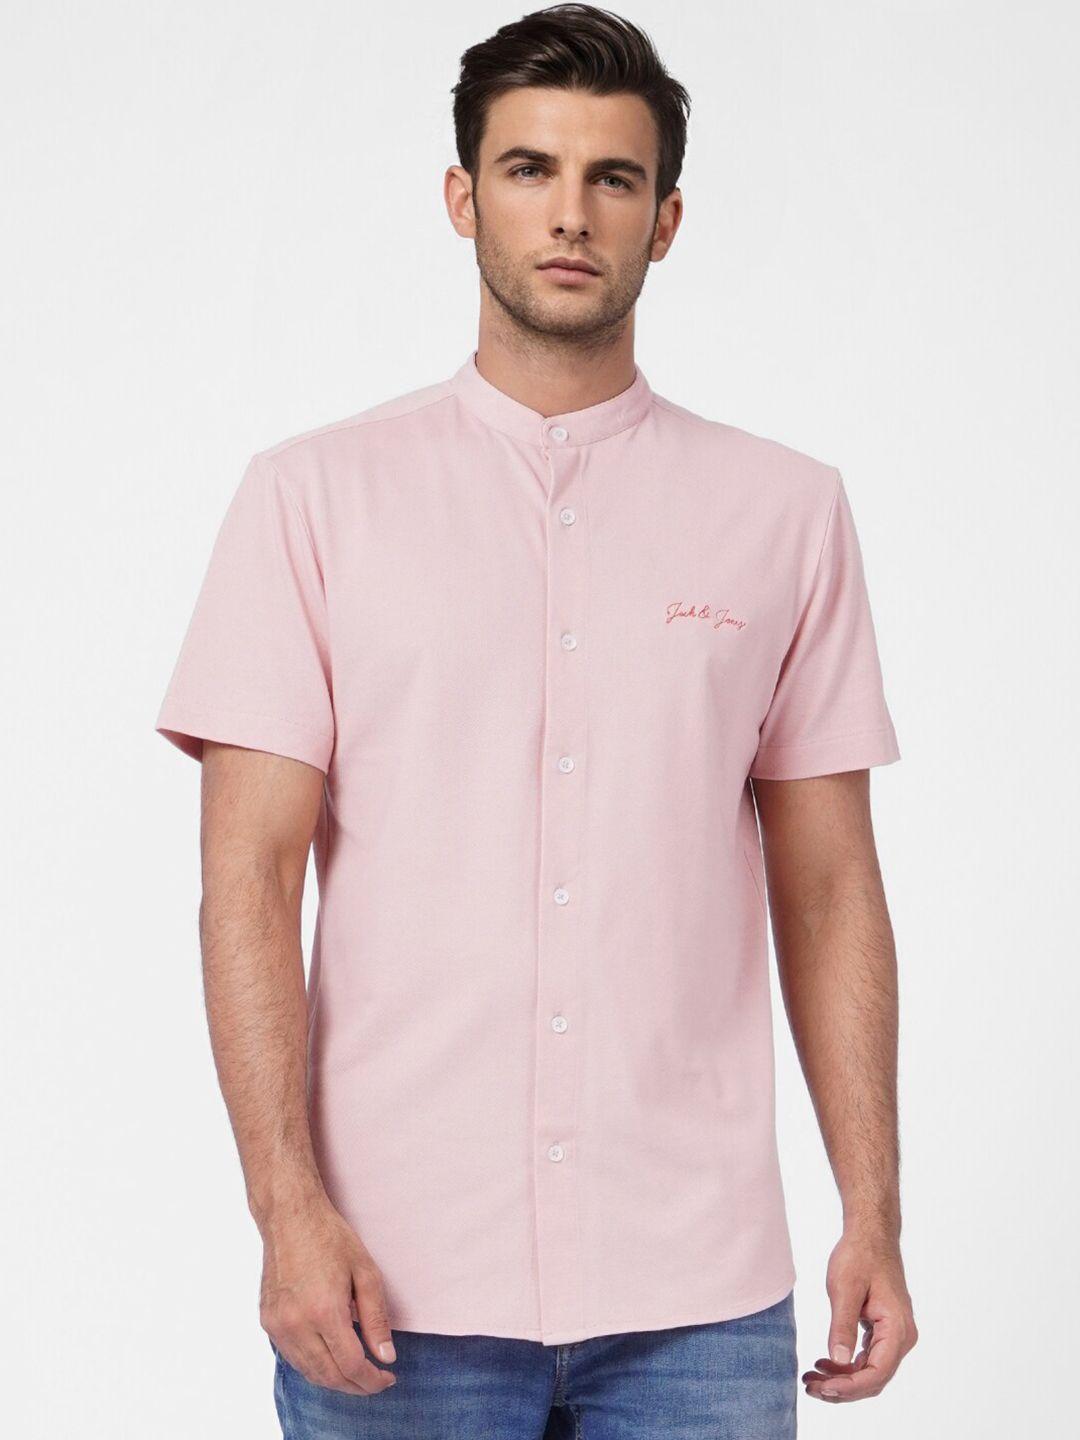 jack & jones men pink cotton slim fit casual shirt